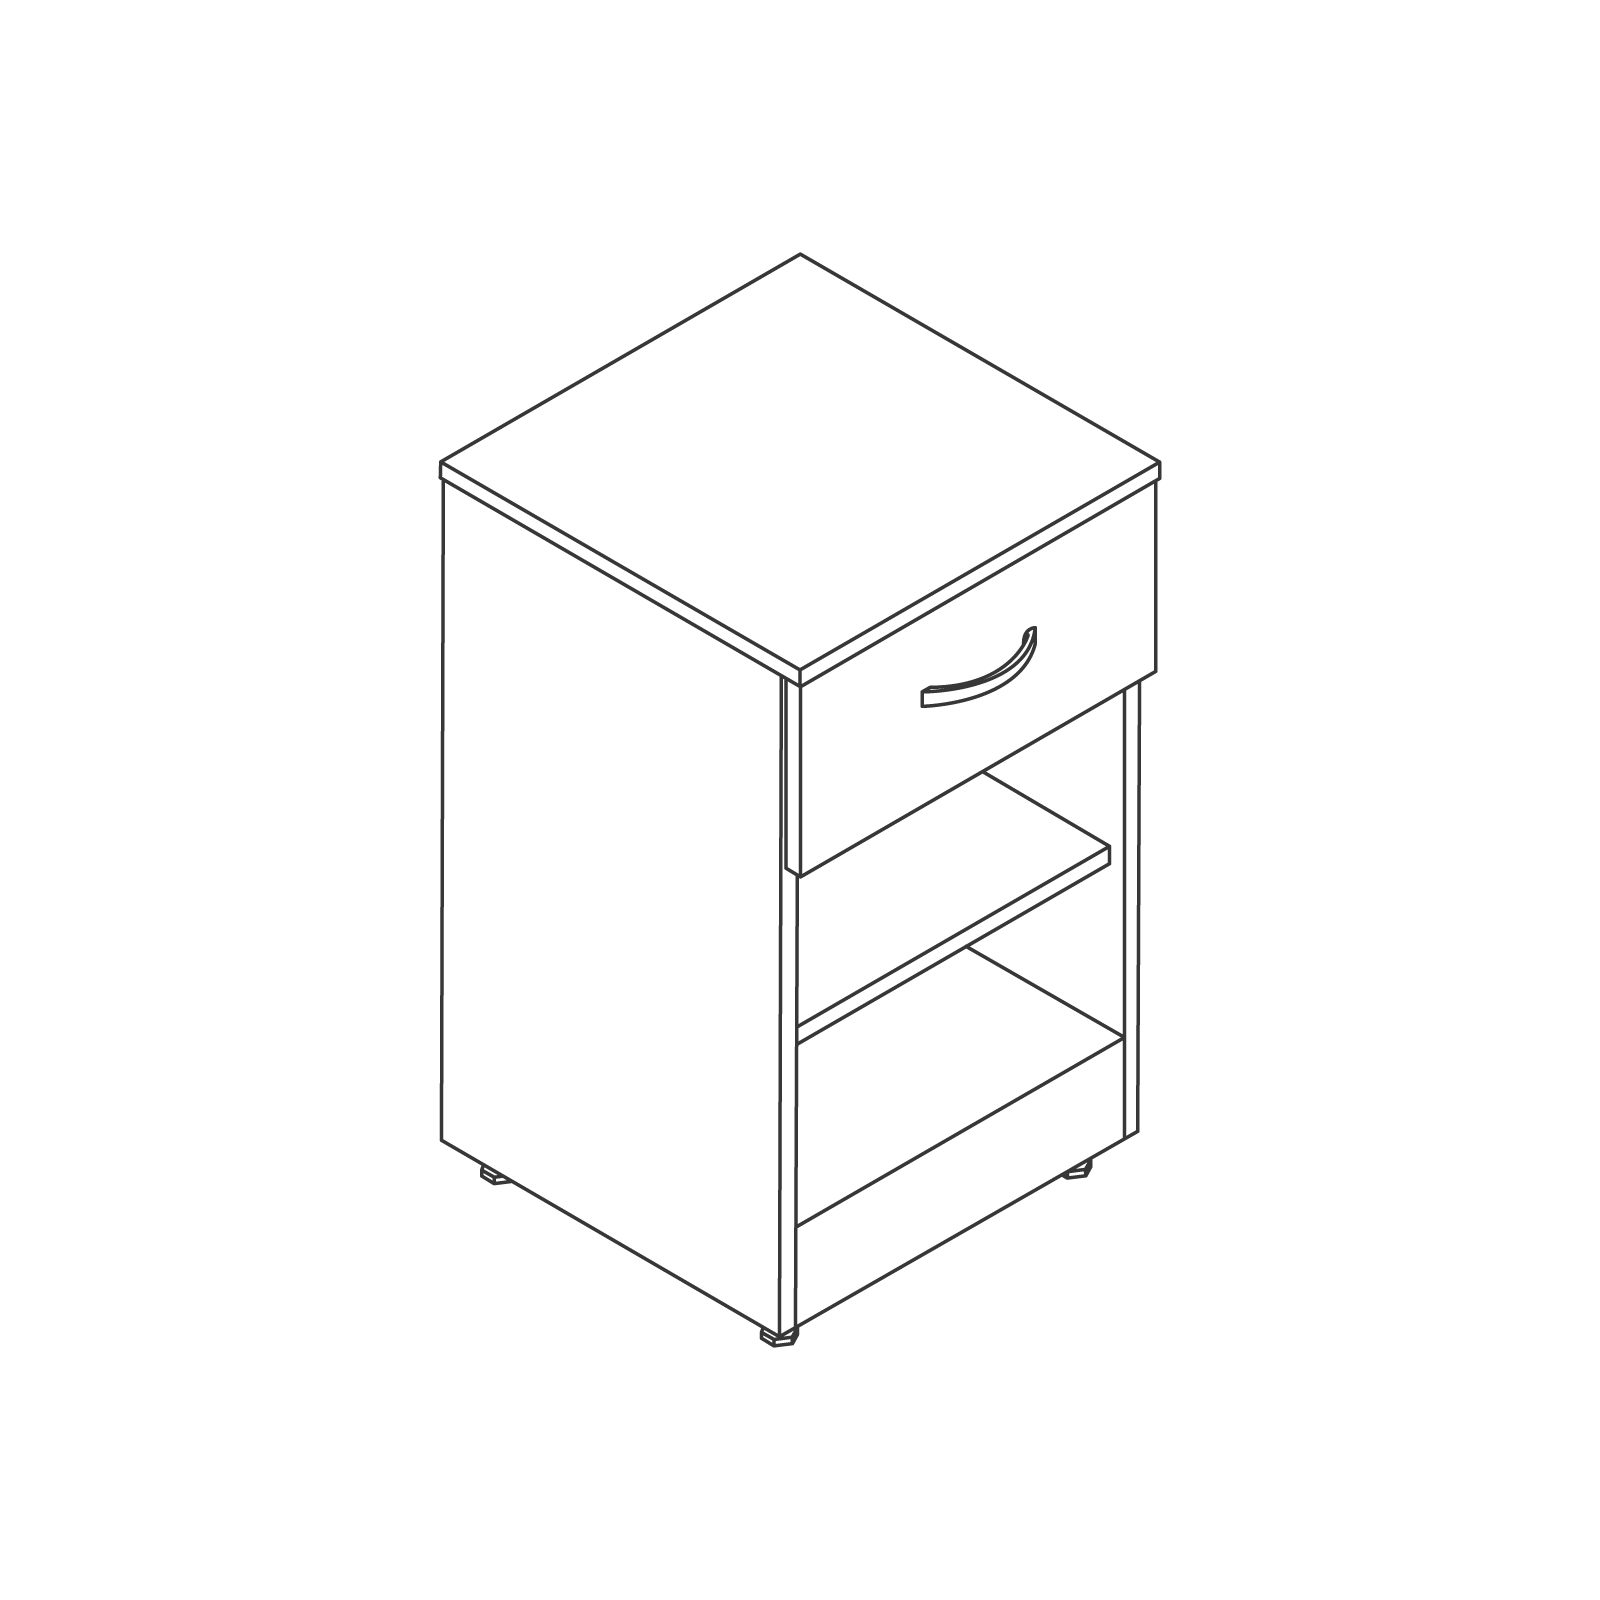 A line drawing - Nemschoff Bedside Cabinet–Adjustable Glides